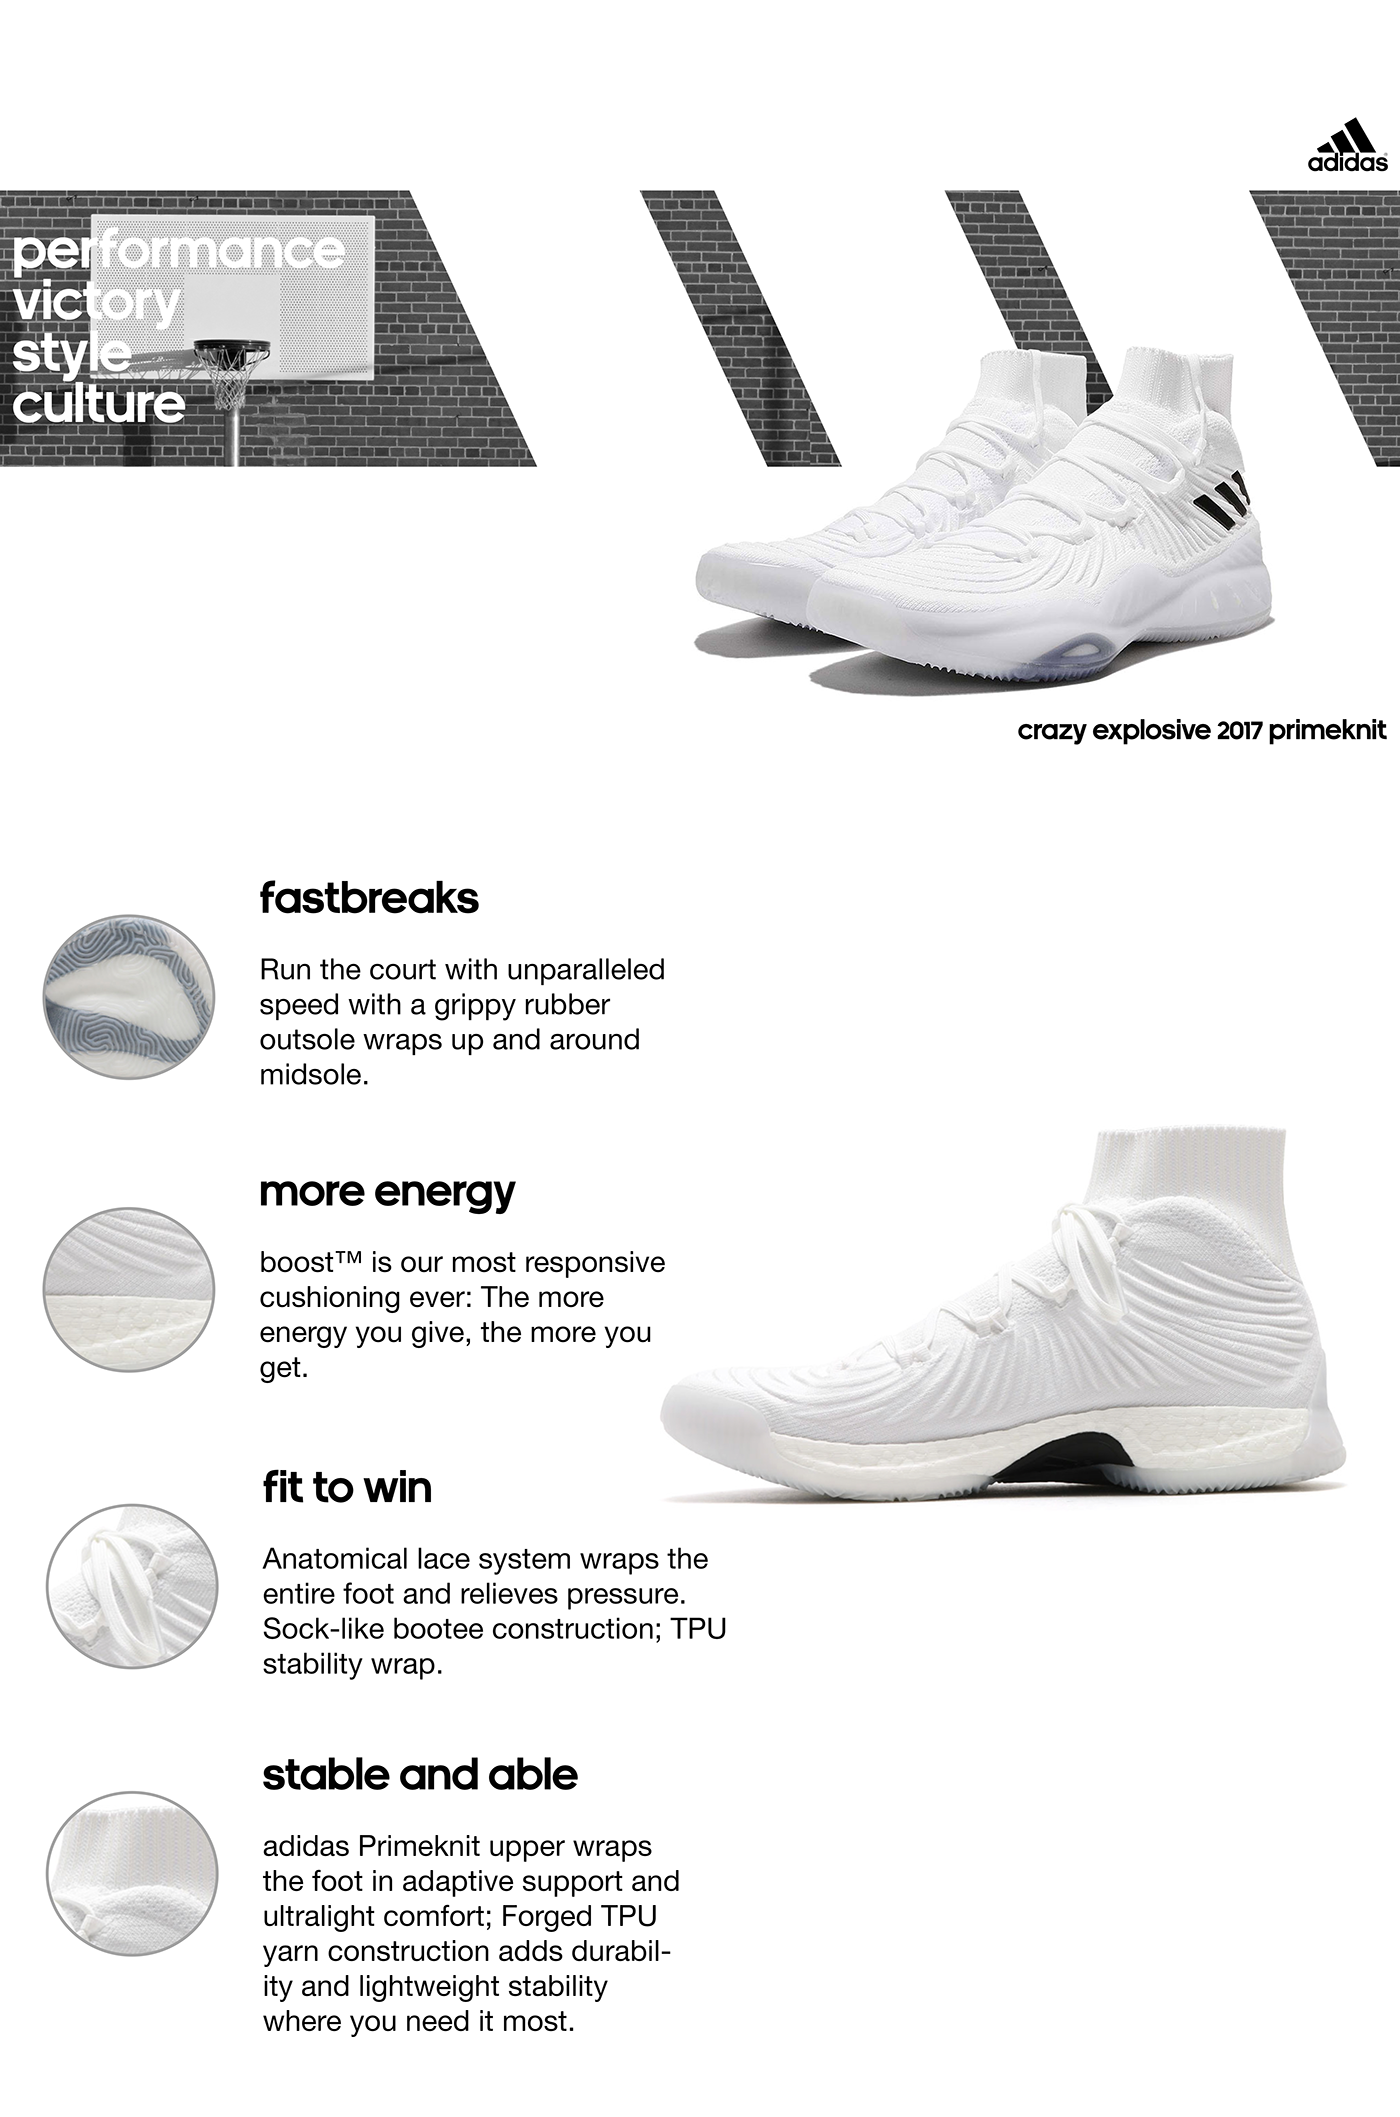 adidas shoes basketball branding  Fashion  Web UI Web Design  3stripeslife adidas original